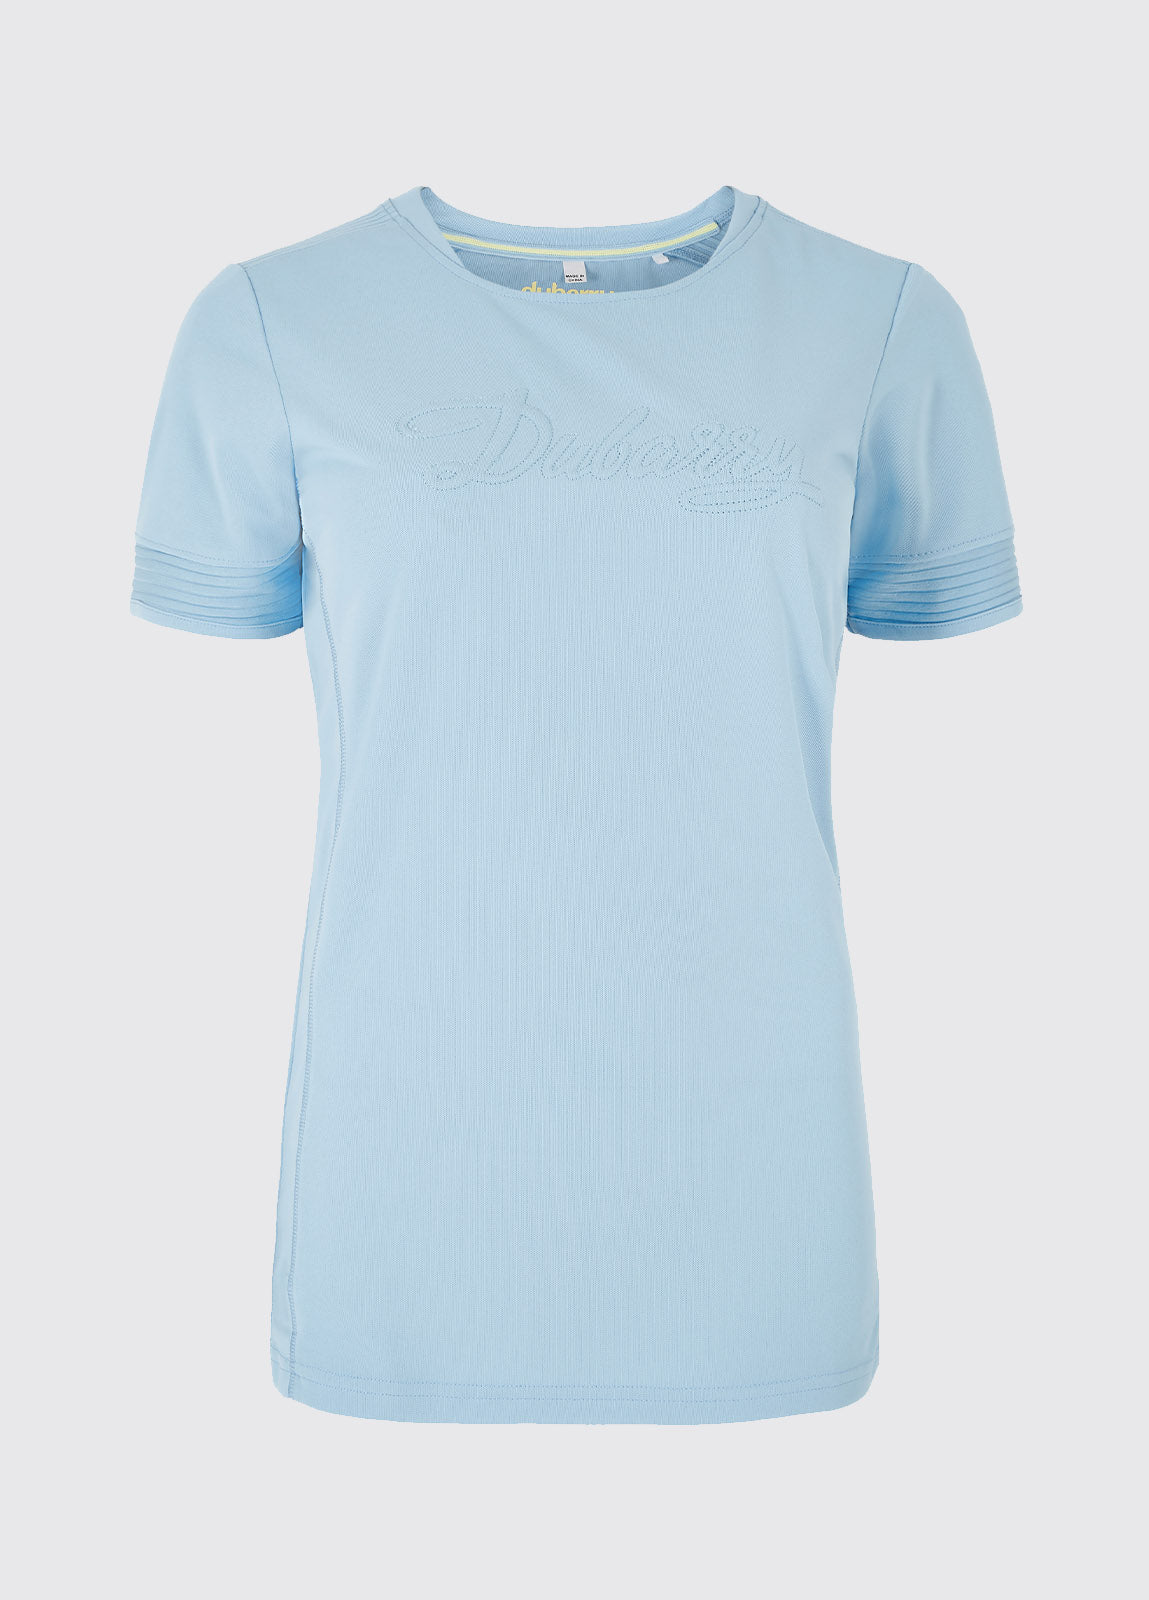 Dubarry Trim Active T-Shirt - Light Sky